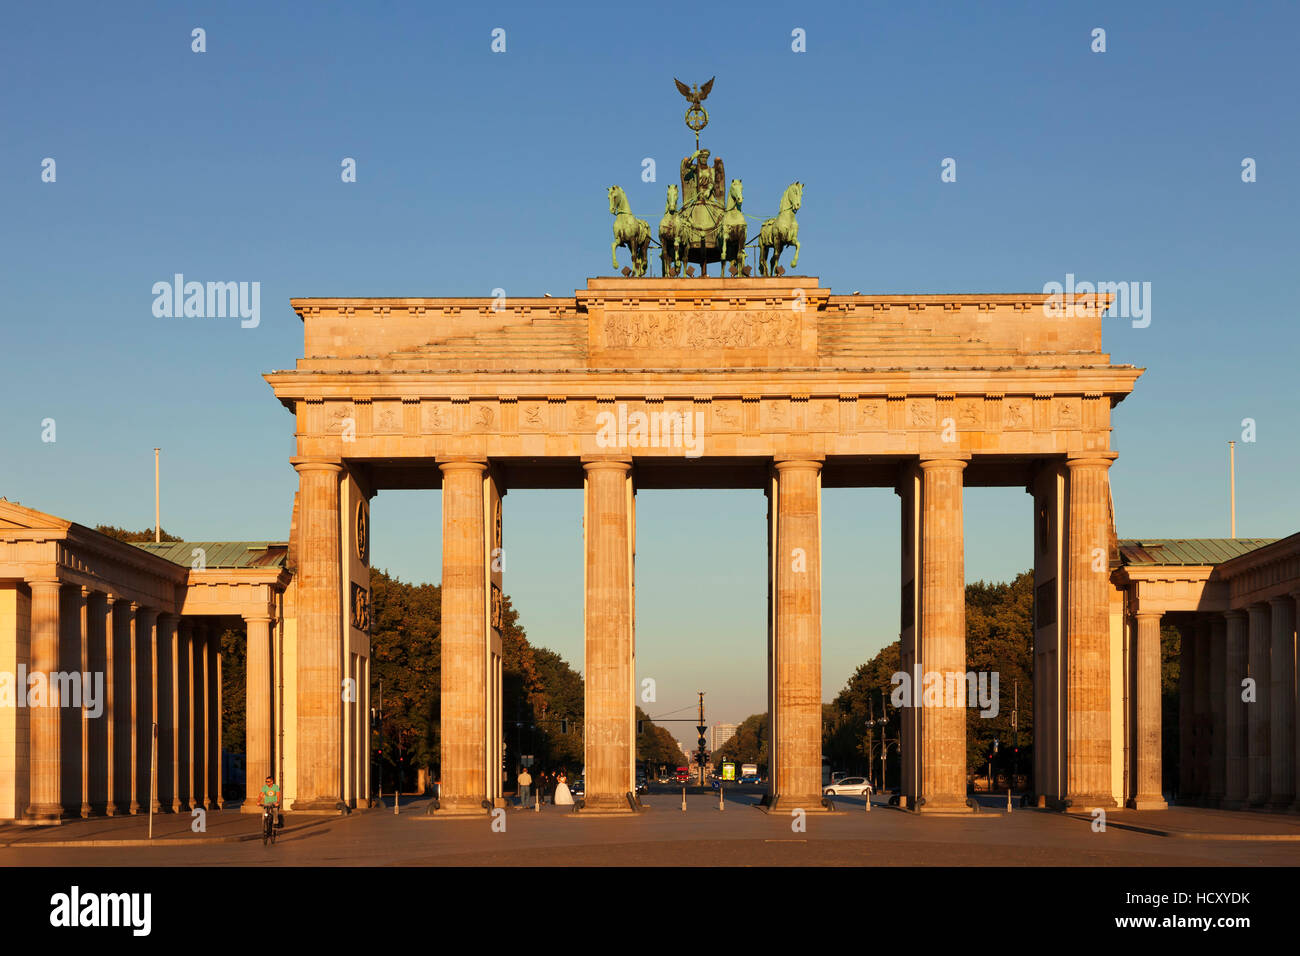 La Puerta de Brandenburgo (Brandenburger Tor) en Sunrise, Quadriga, Berlin Mitte, Berlin, Alemania Foto de stock